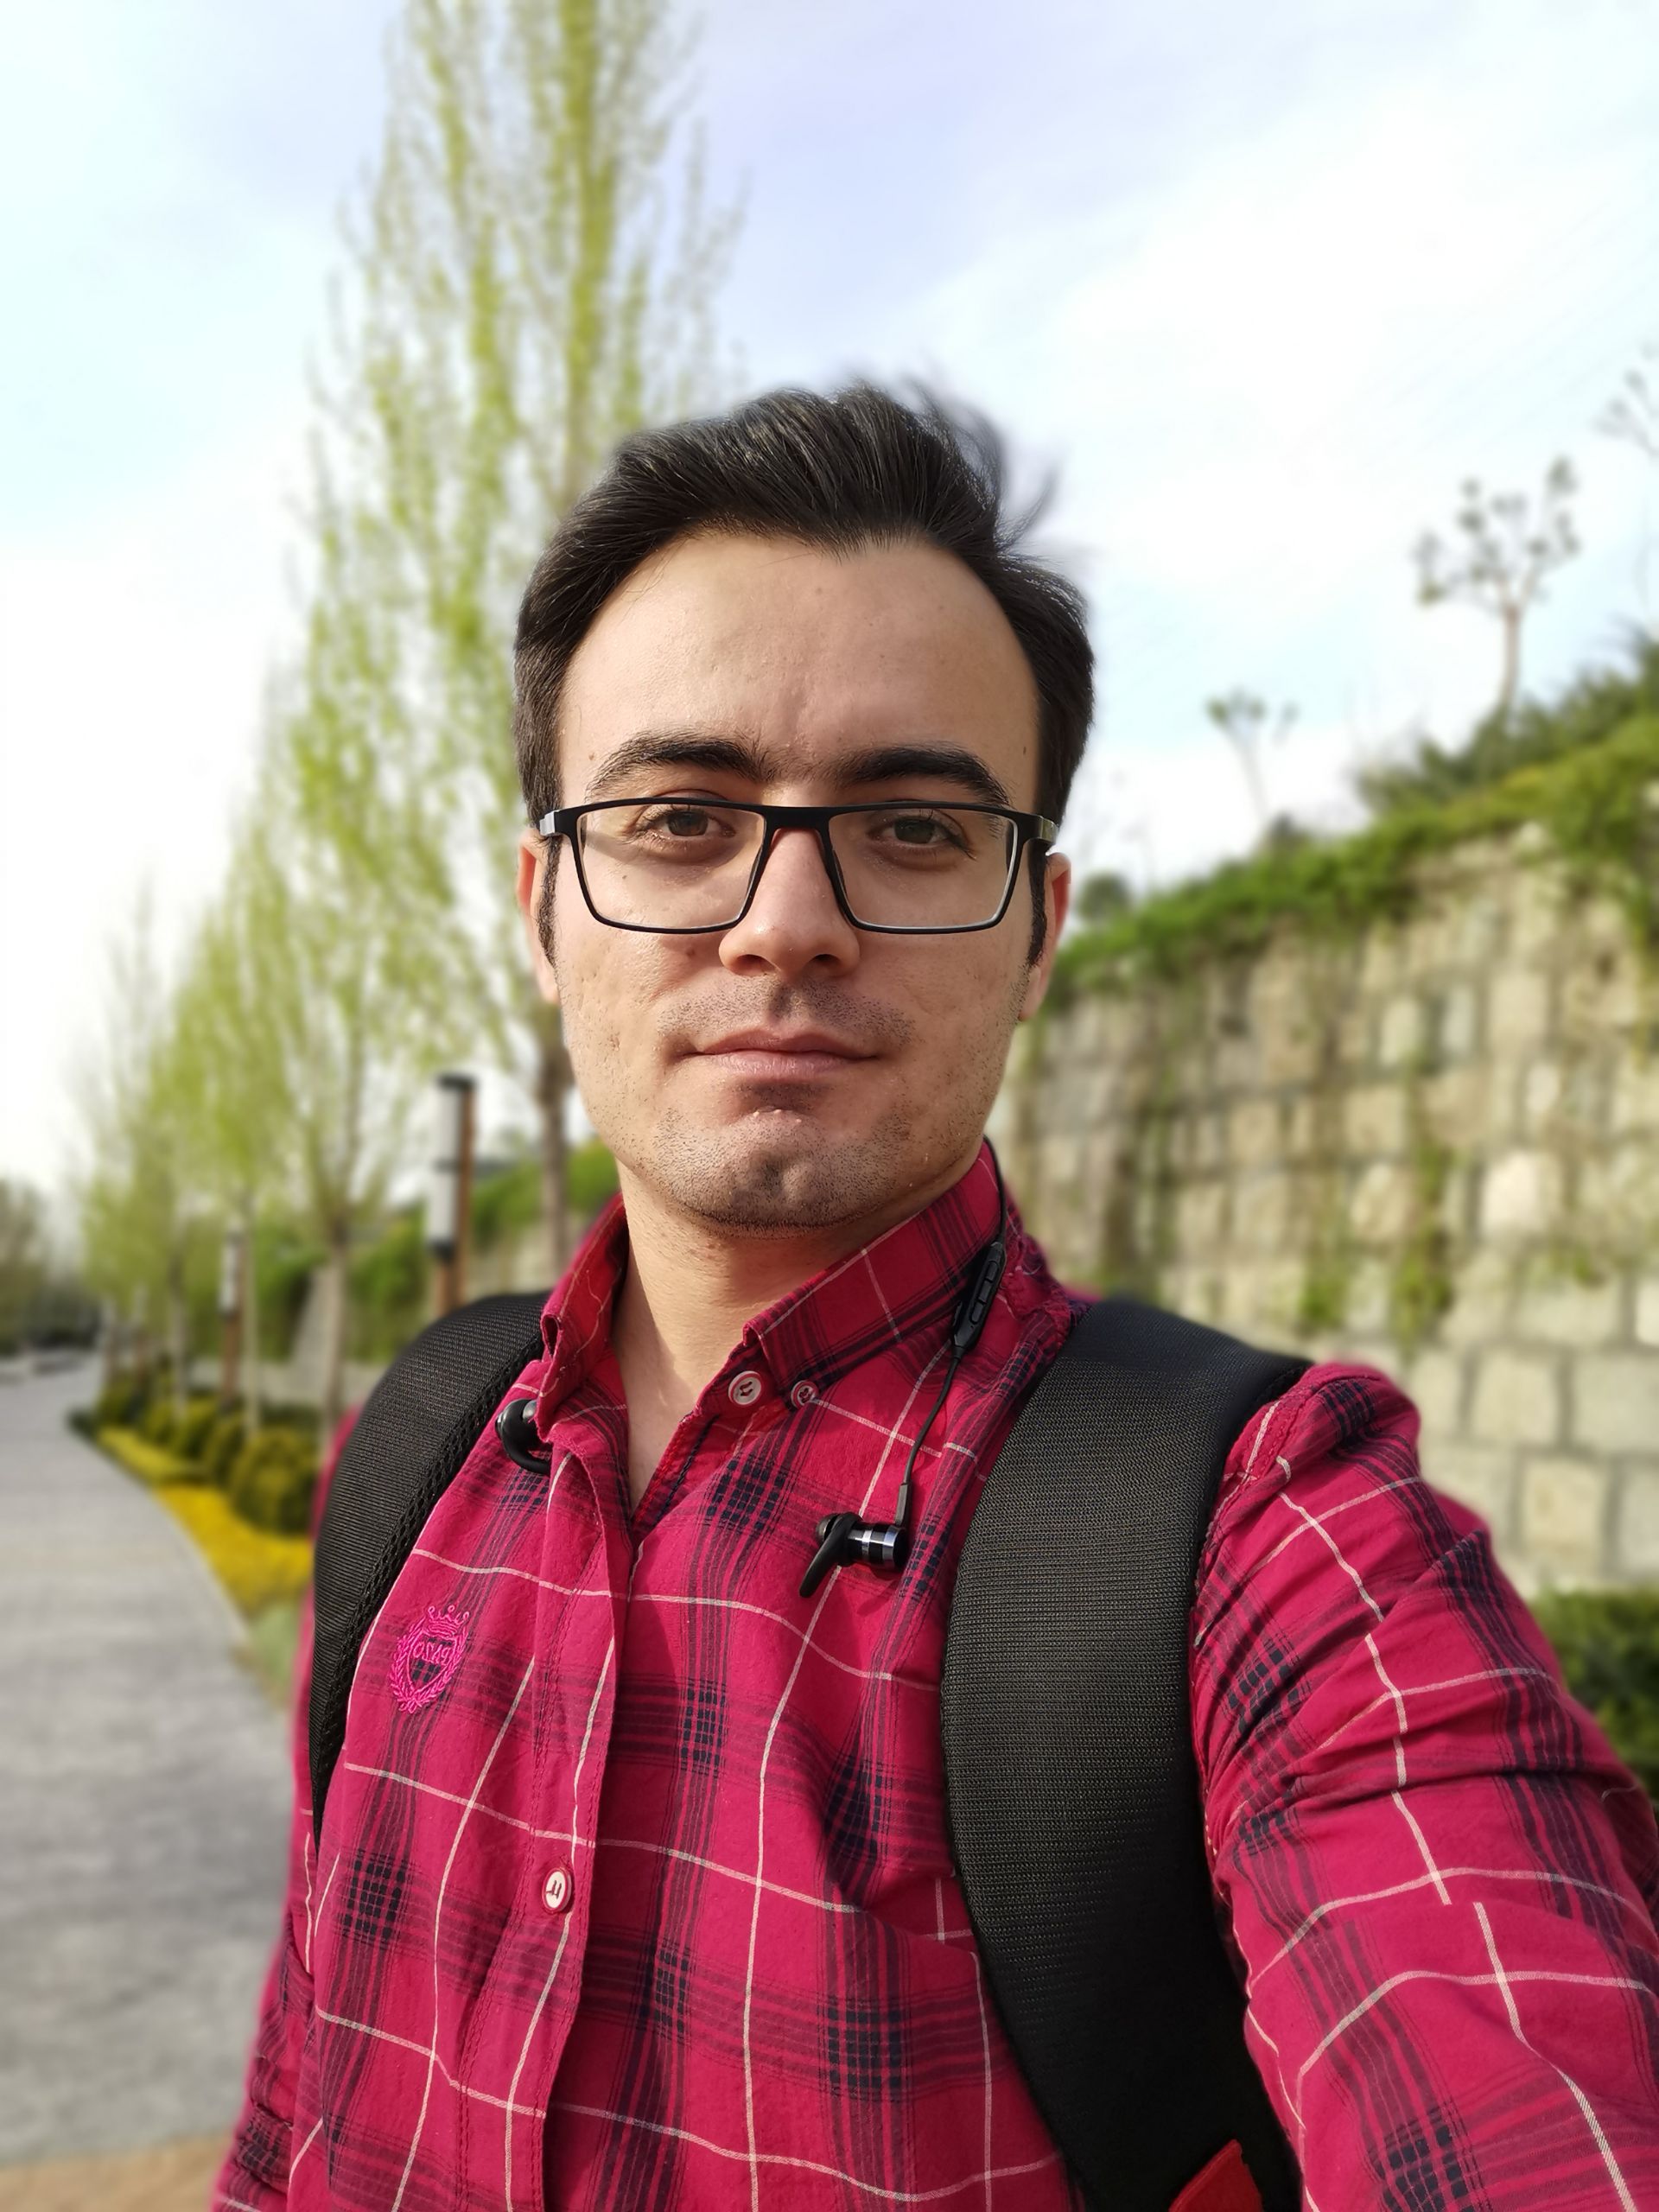 Huawei P30 Pro Selfie - Daylight Bokeh